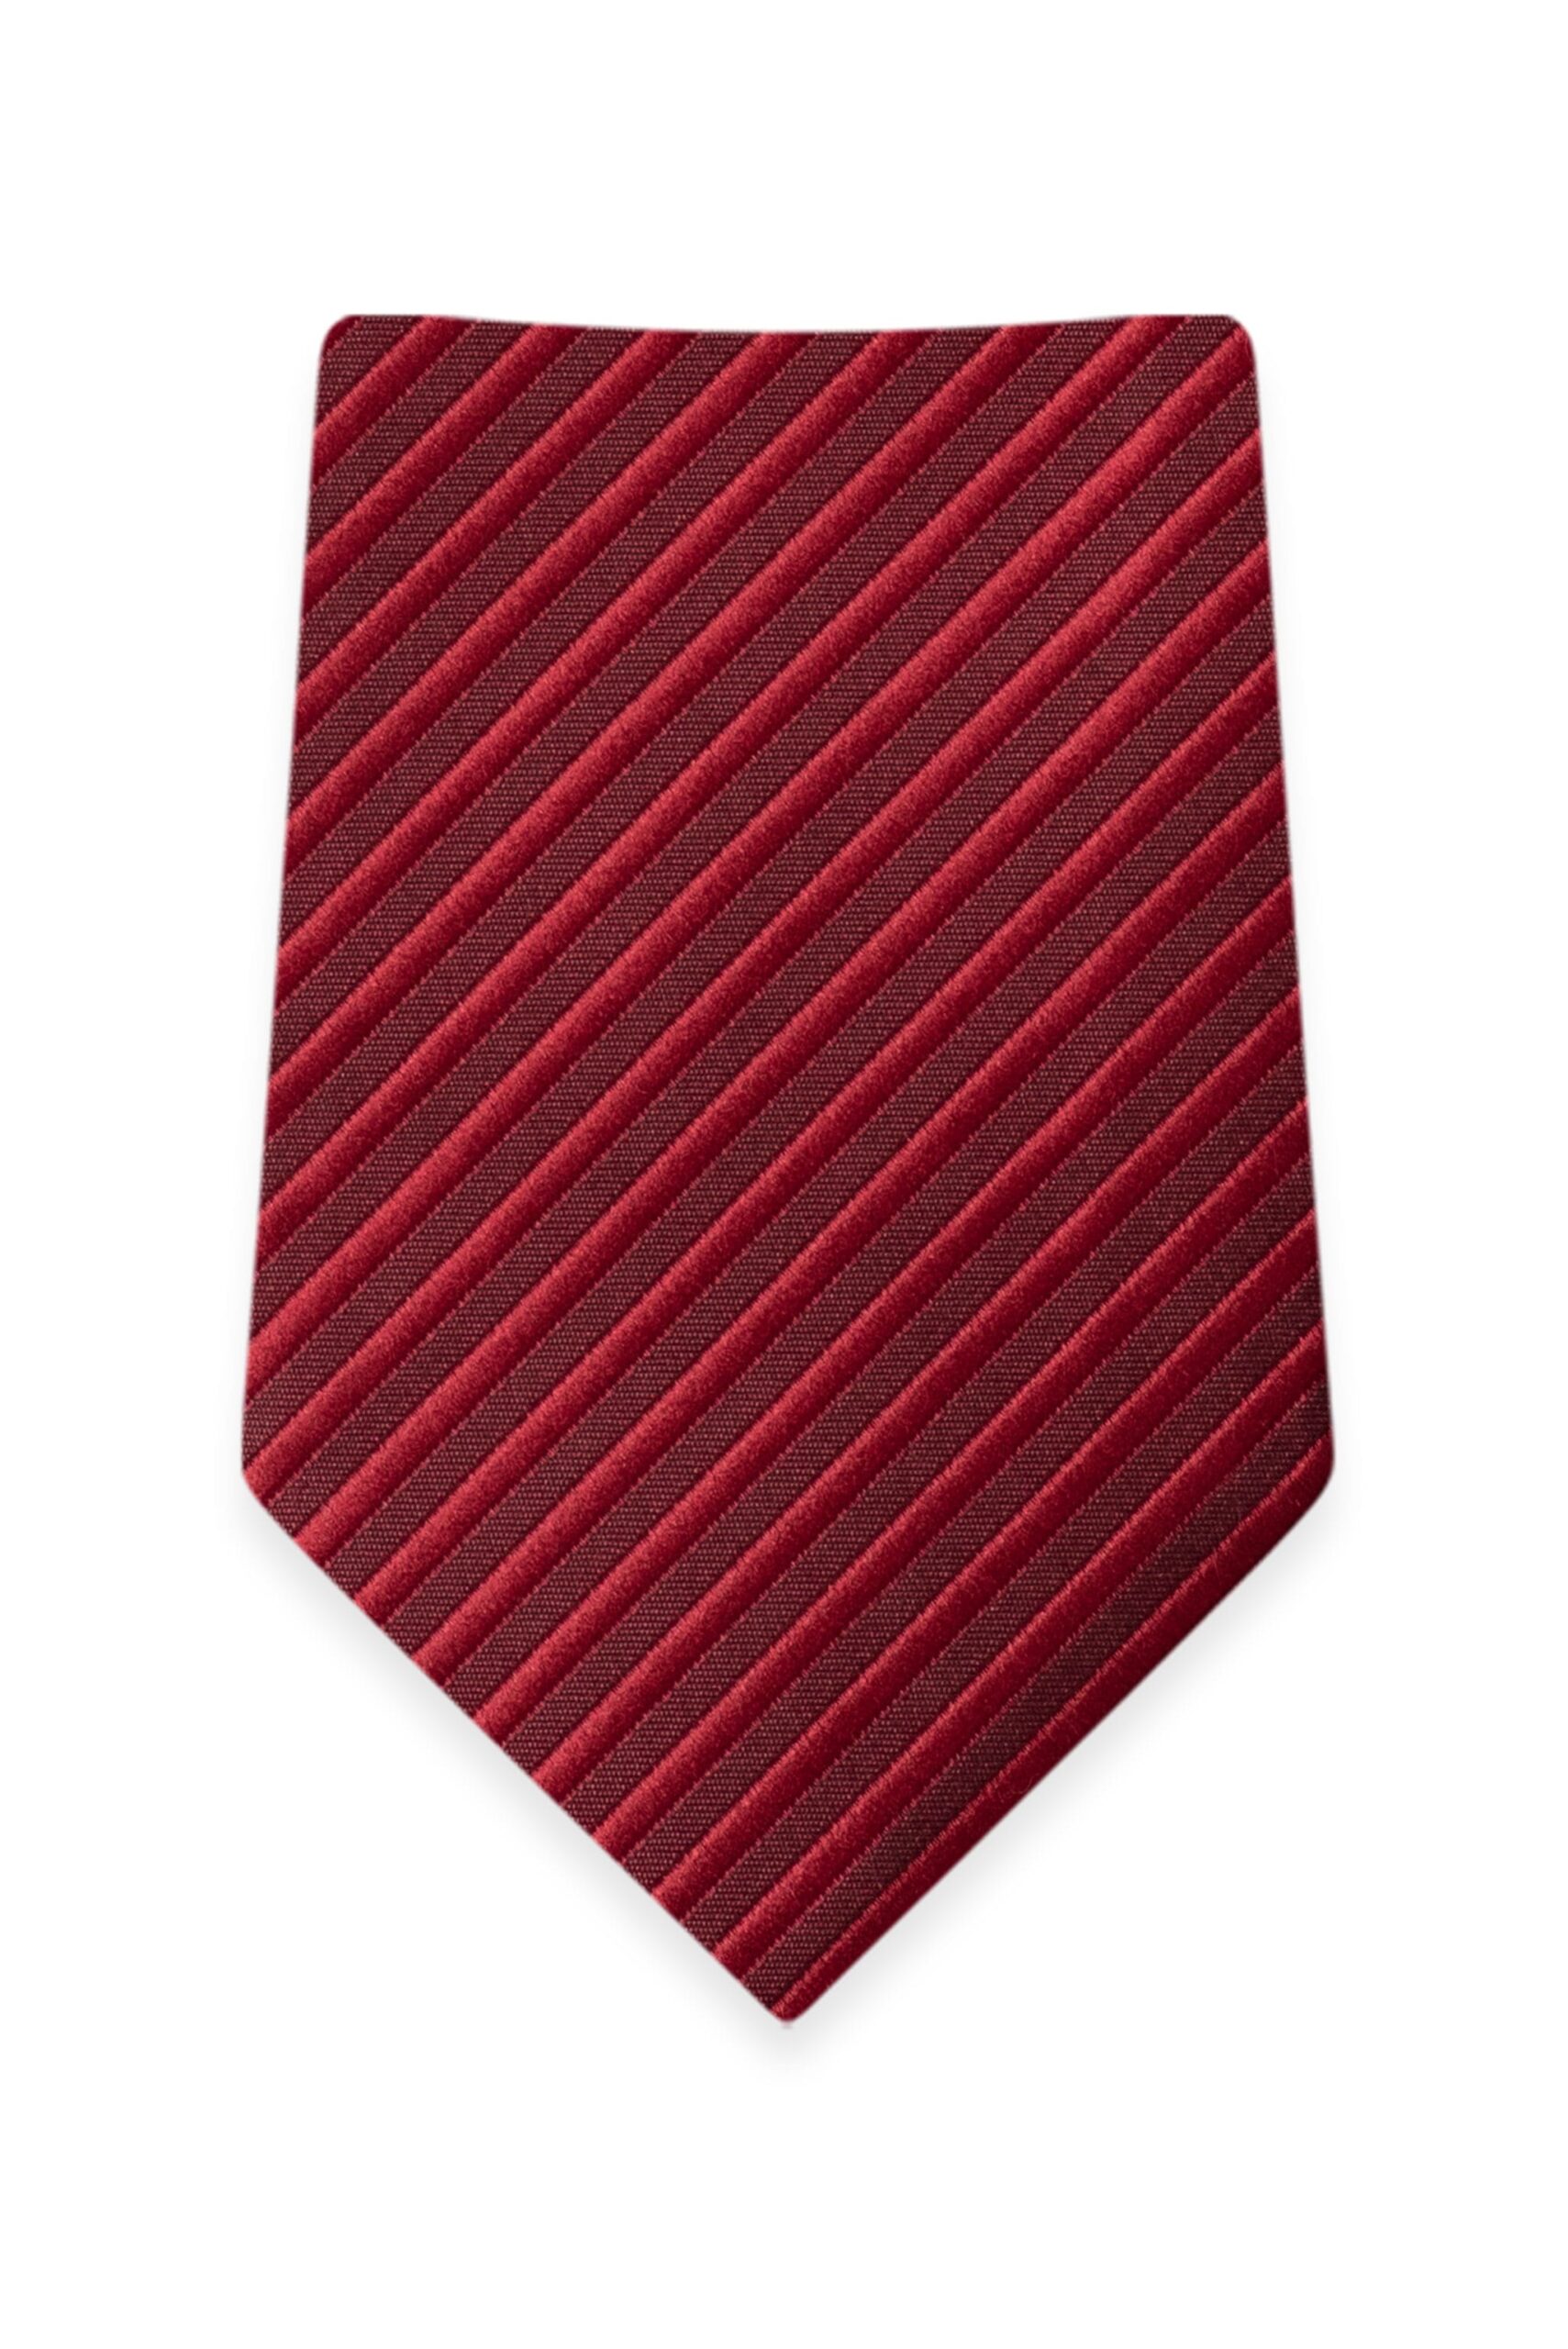 Striped Apple Red Self-Tie Windsor Tie 1